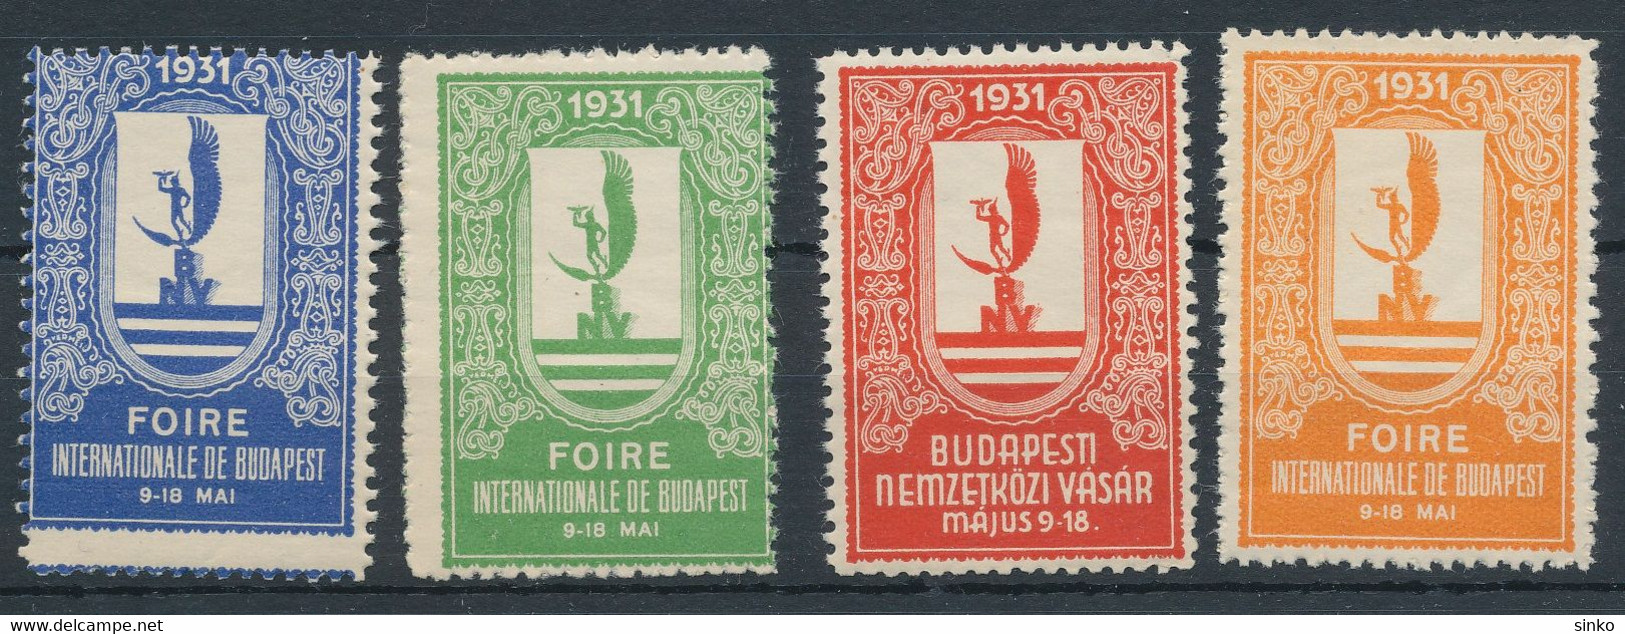 1931. Budapest International Fair - Cinderella - Foglietto Ricordo